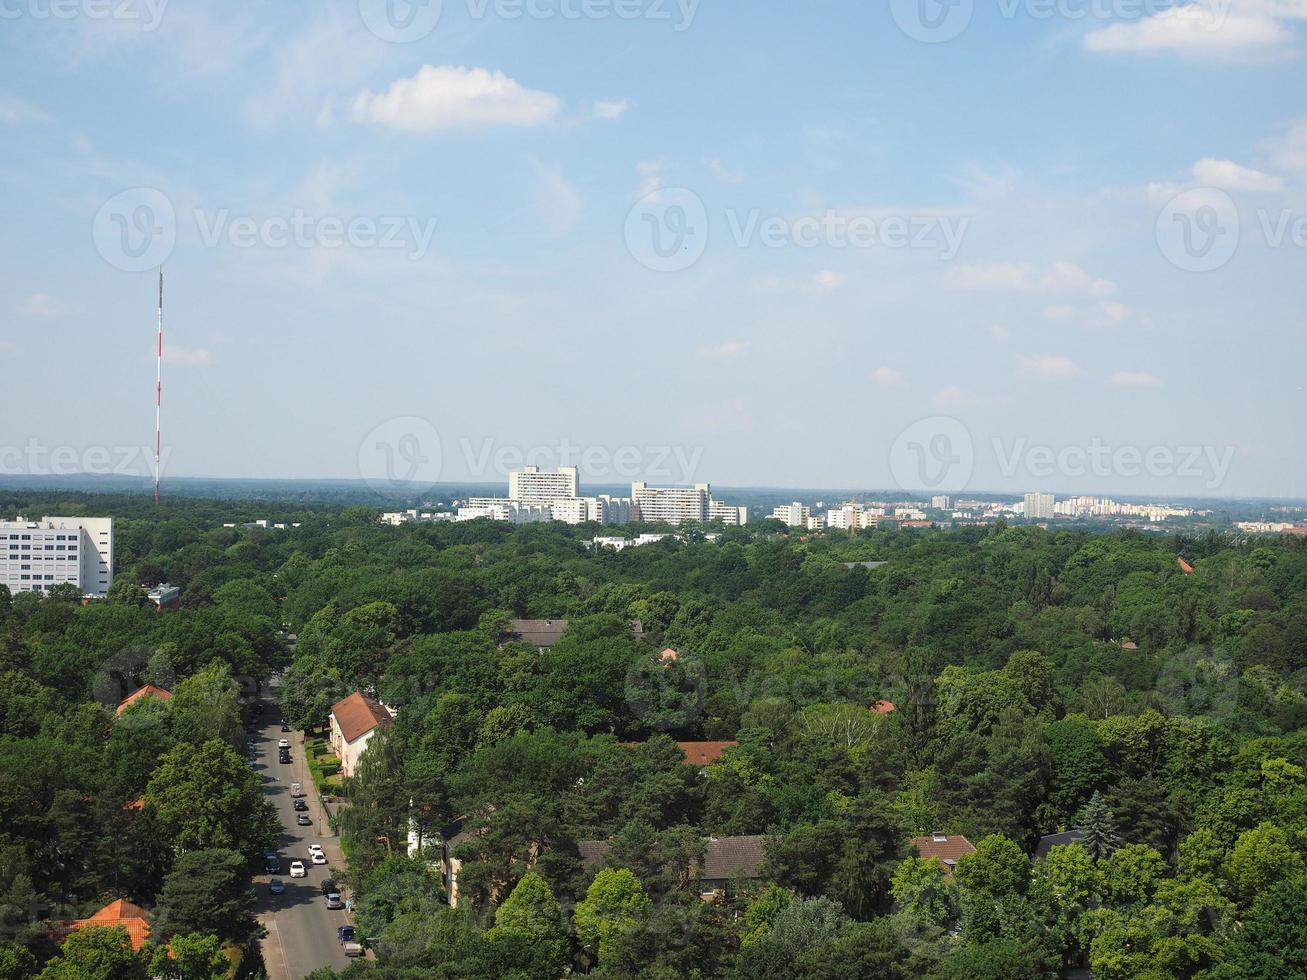 vue aérienne de berlin photo